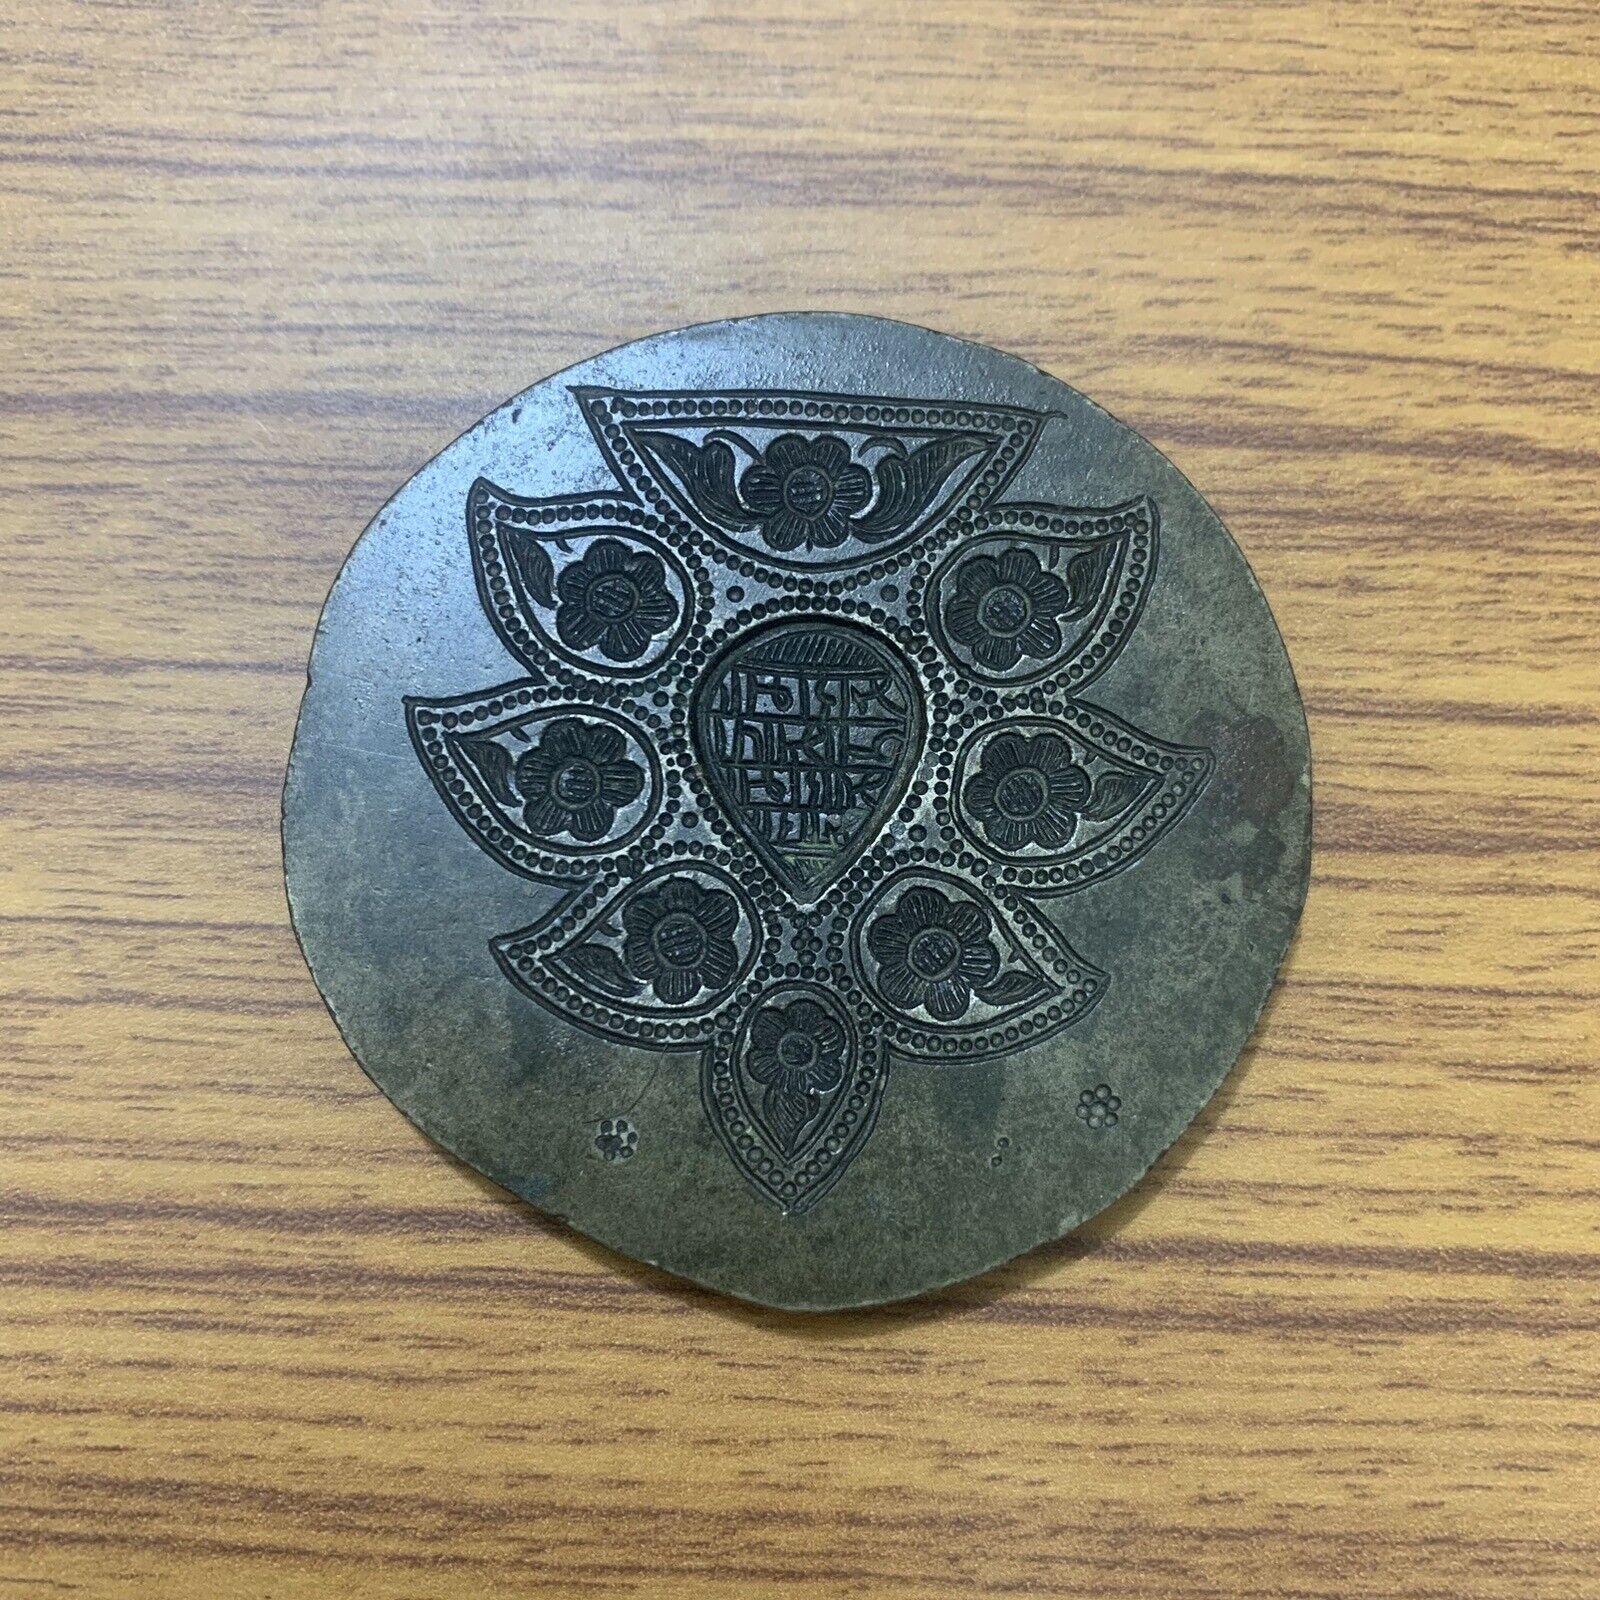 Antique or old bell metal bronze jewelry stamp die seal flower pattern